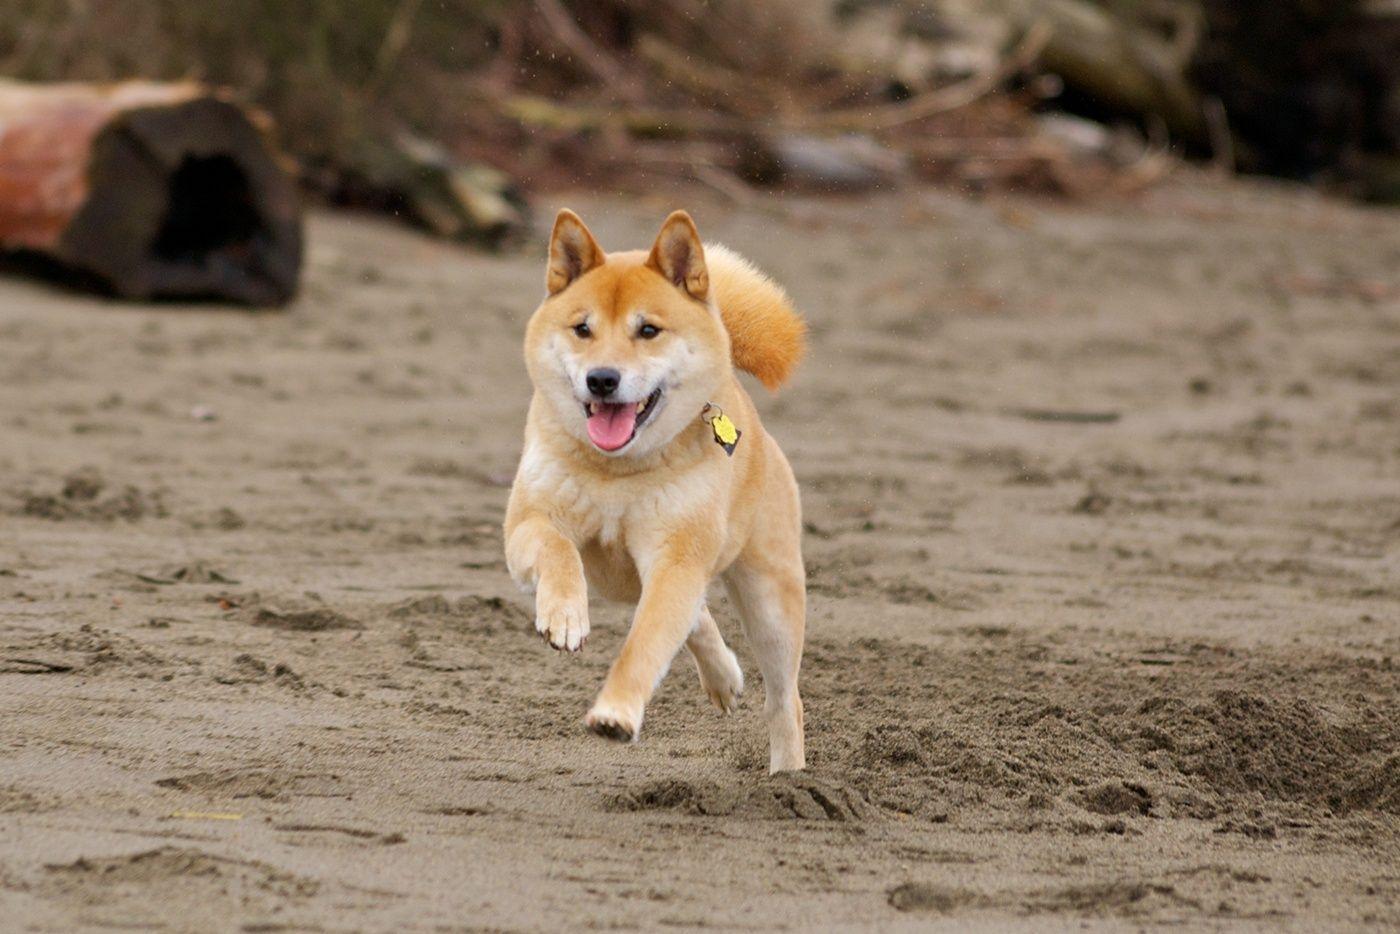 Running Shiba Inu dog photo and wallpaper. Beautiful Running Shiba